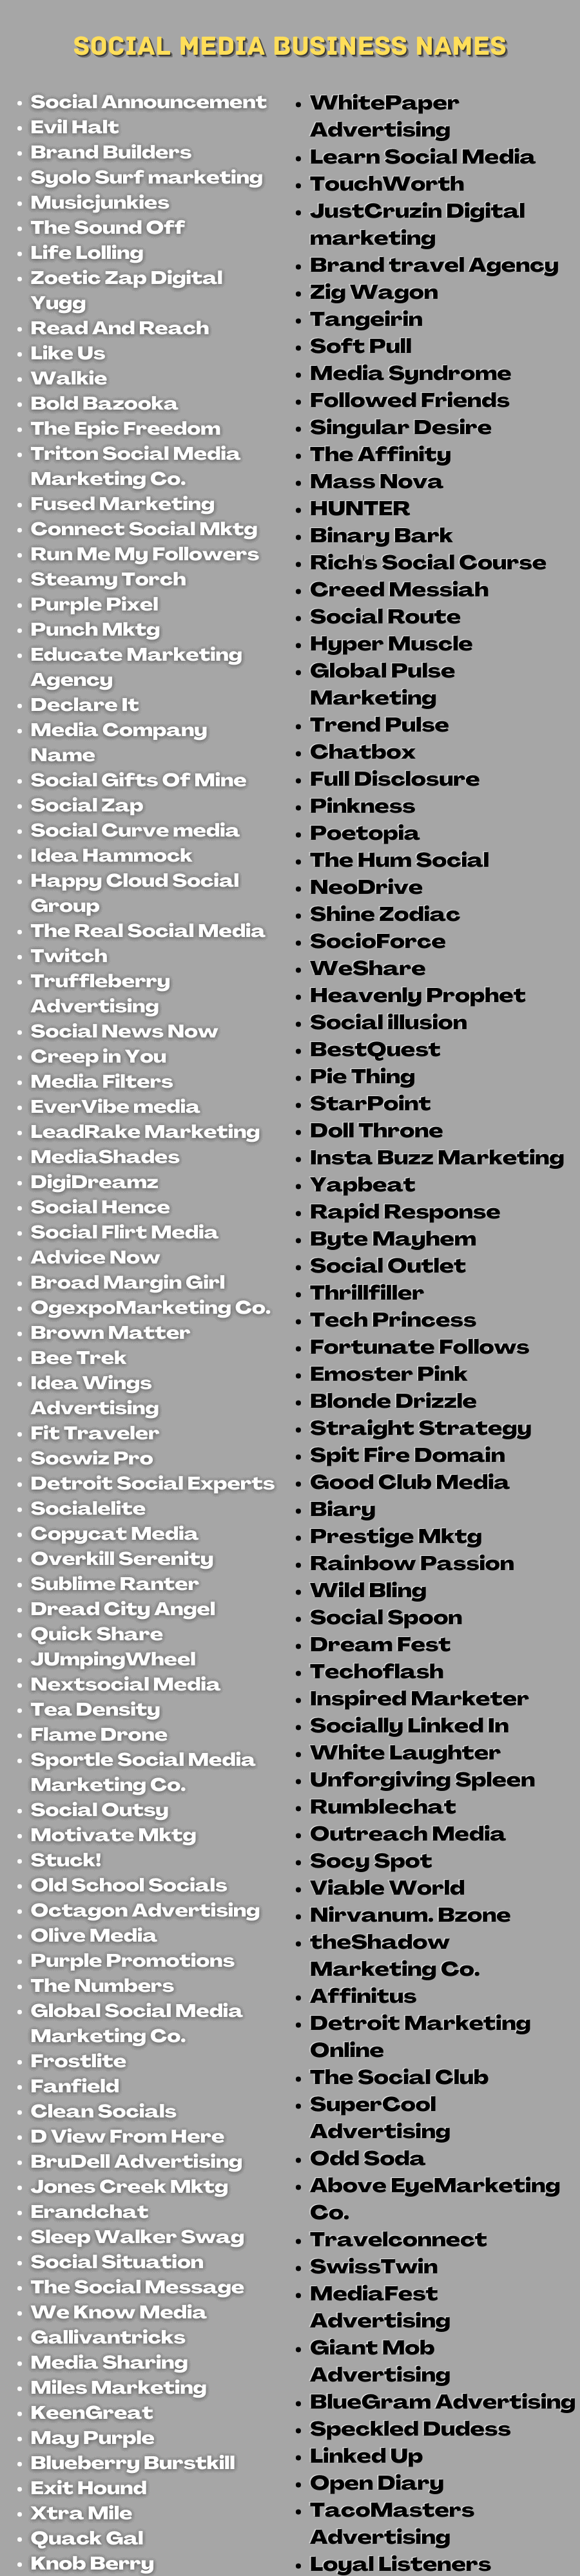 Social Media Business Names